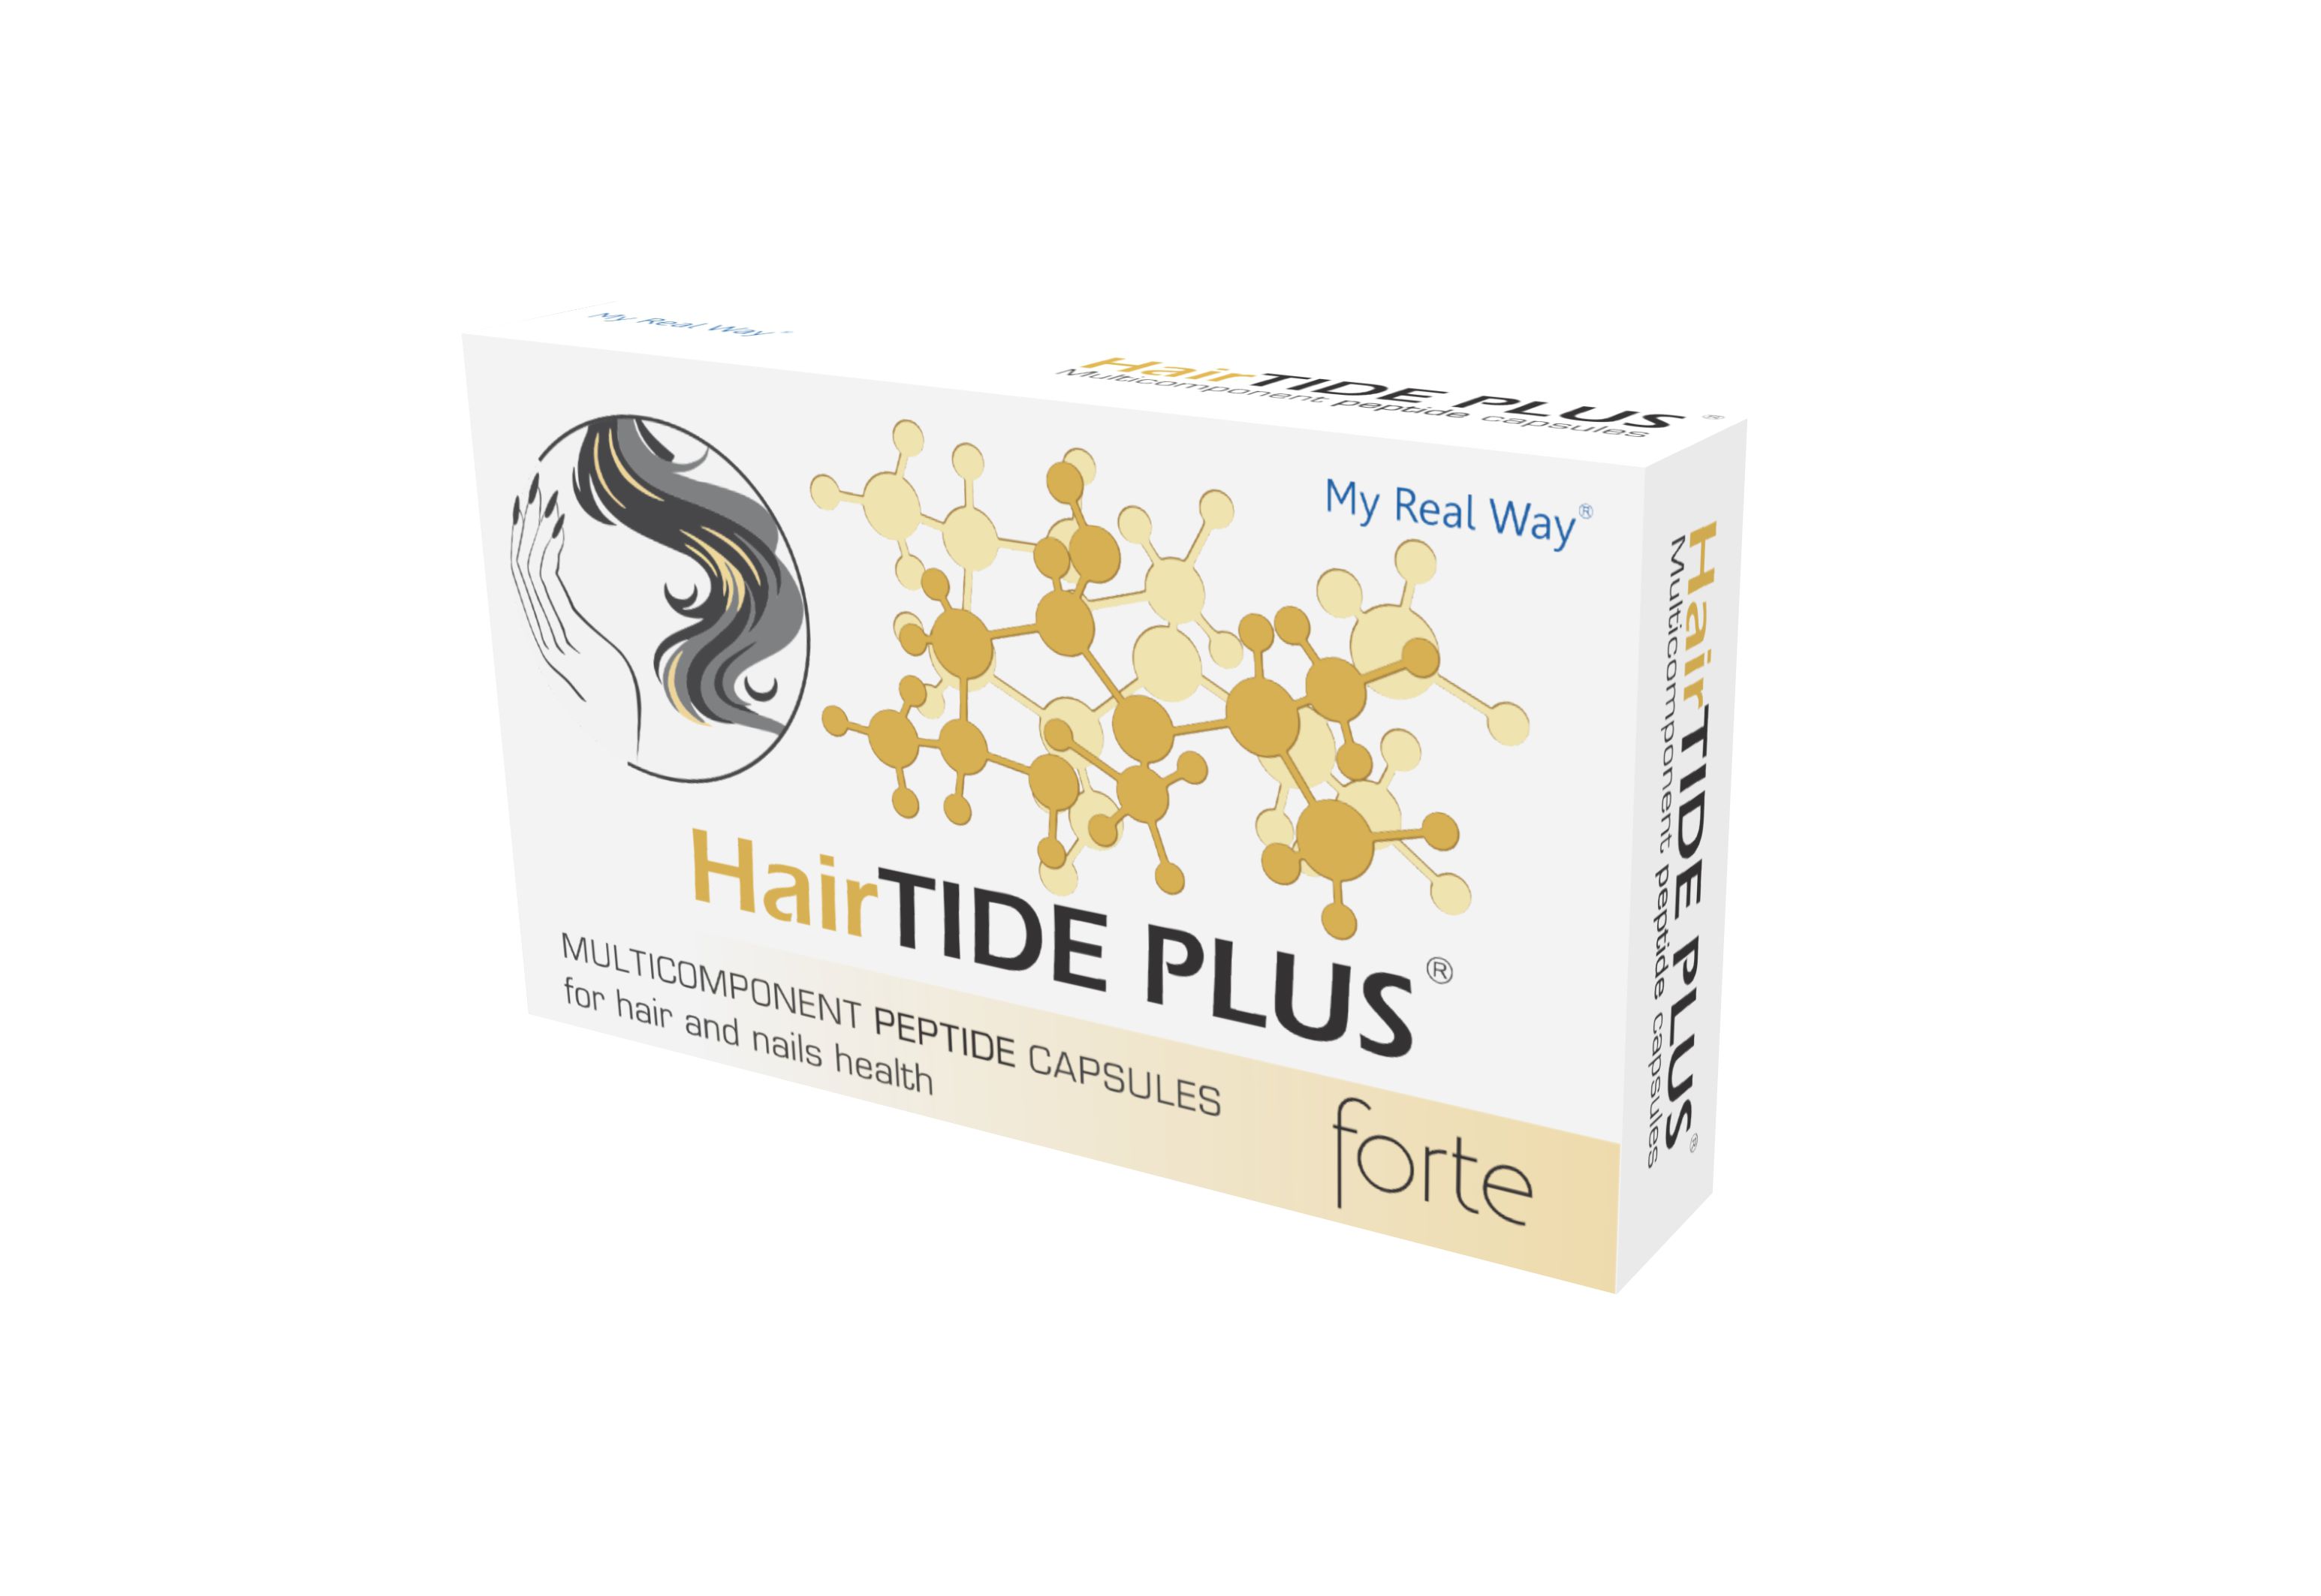 HairTIDE PLUS forte (Хаиртайд) пептиды для волос и ногтей